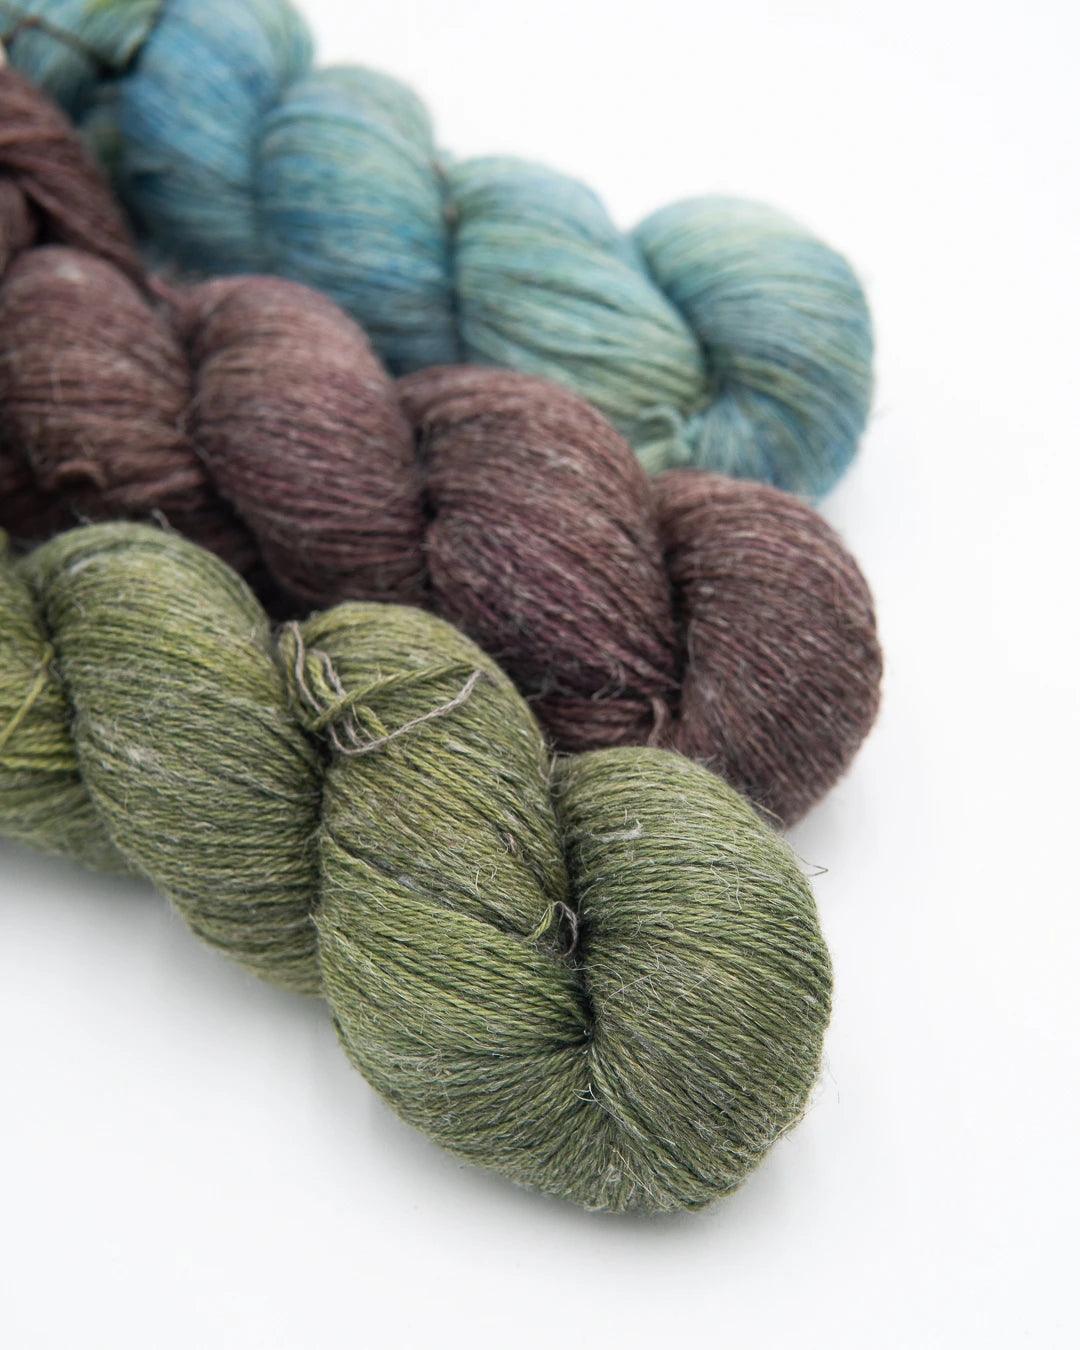 Organic Wool & Linen Fingering Yarn - Aimee Sher Makes